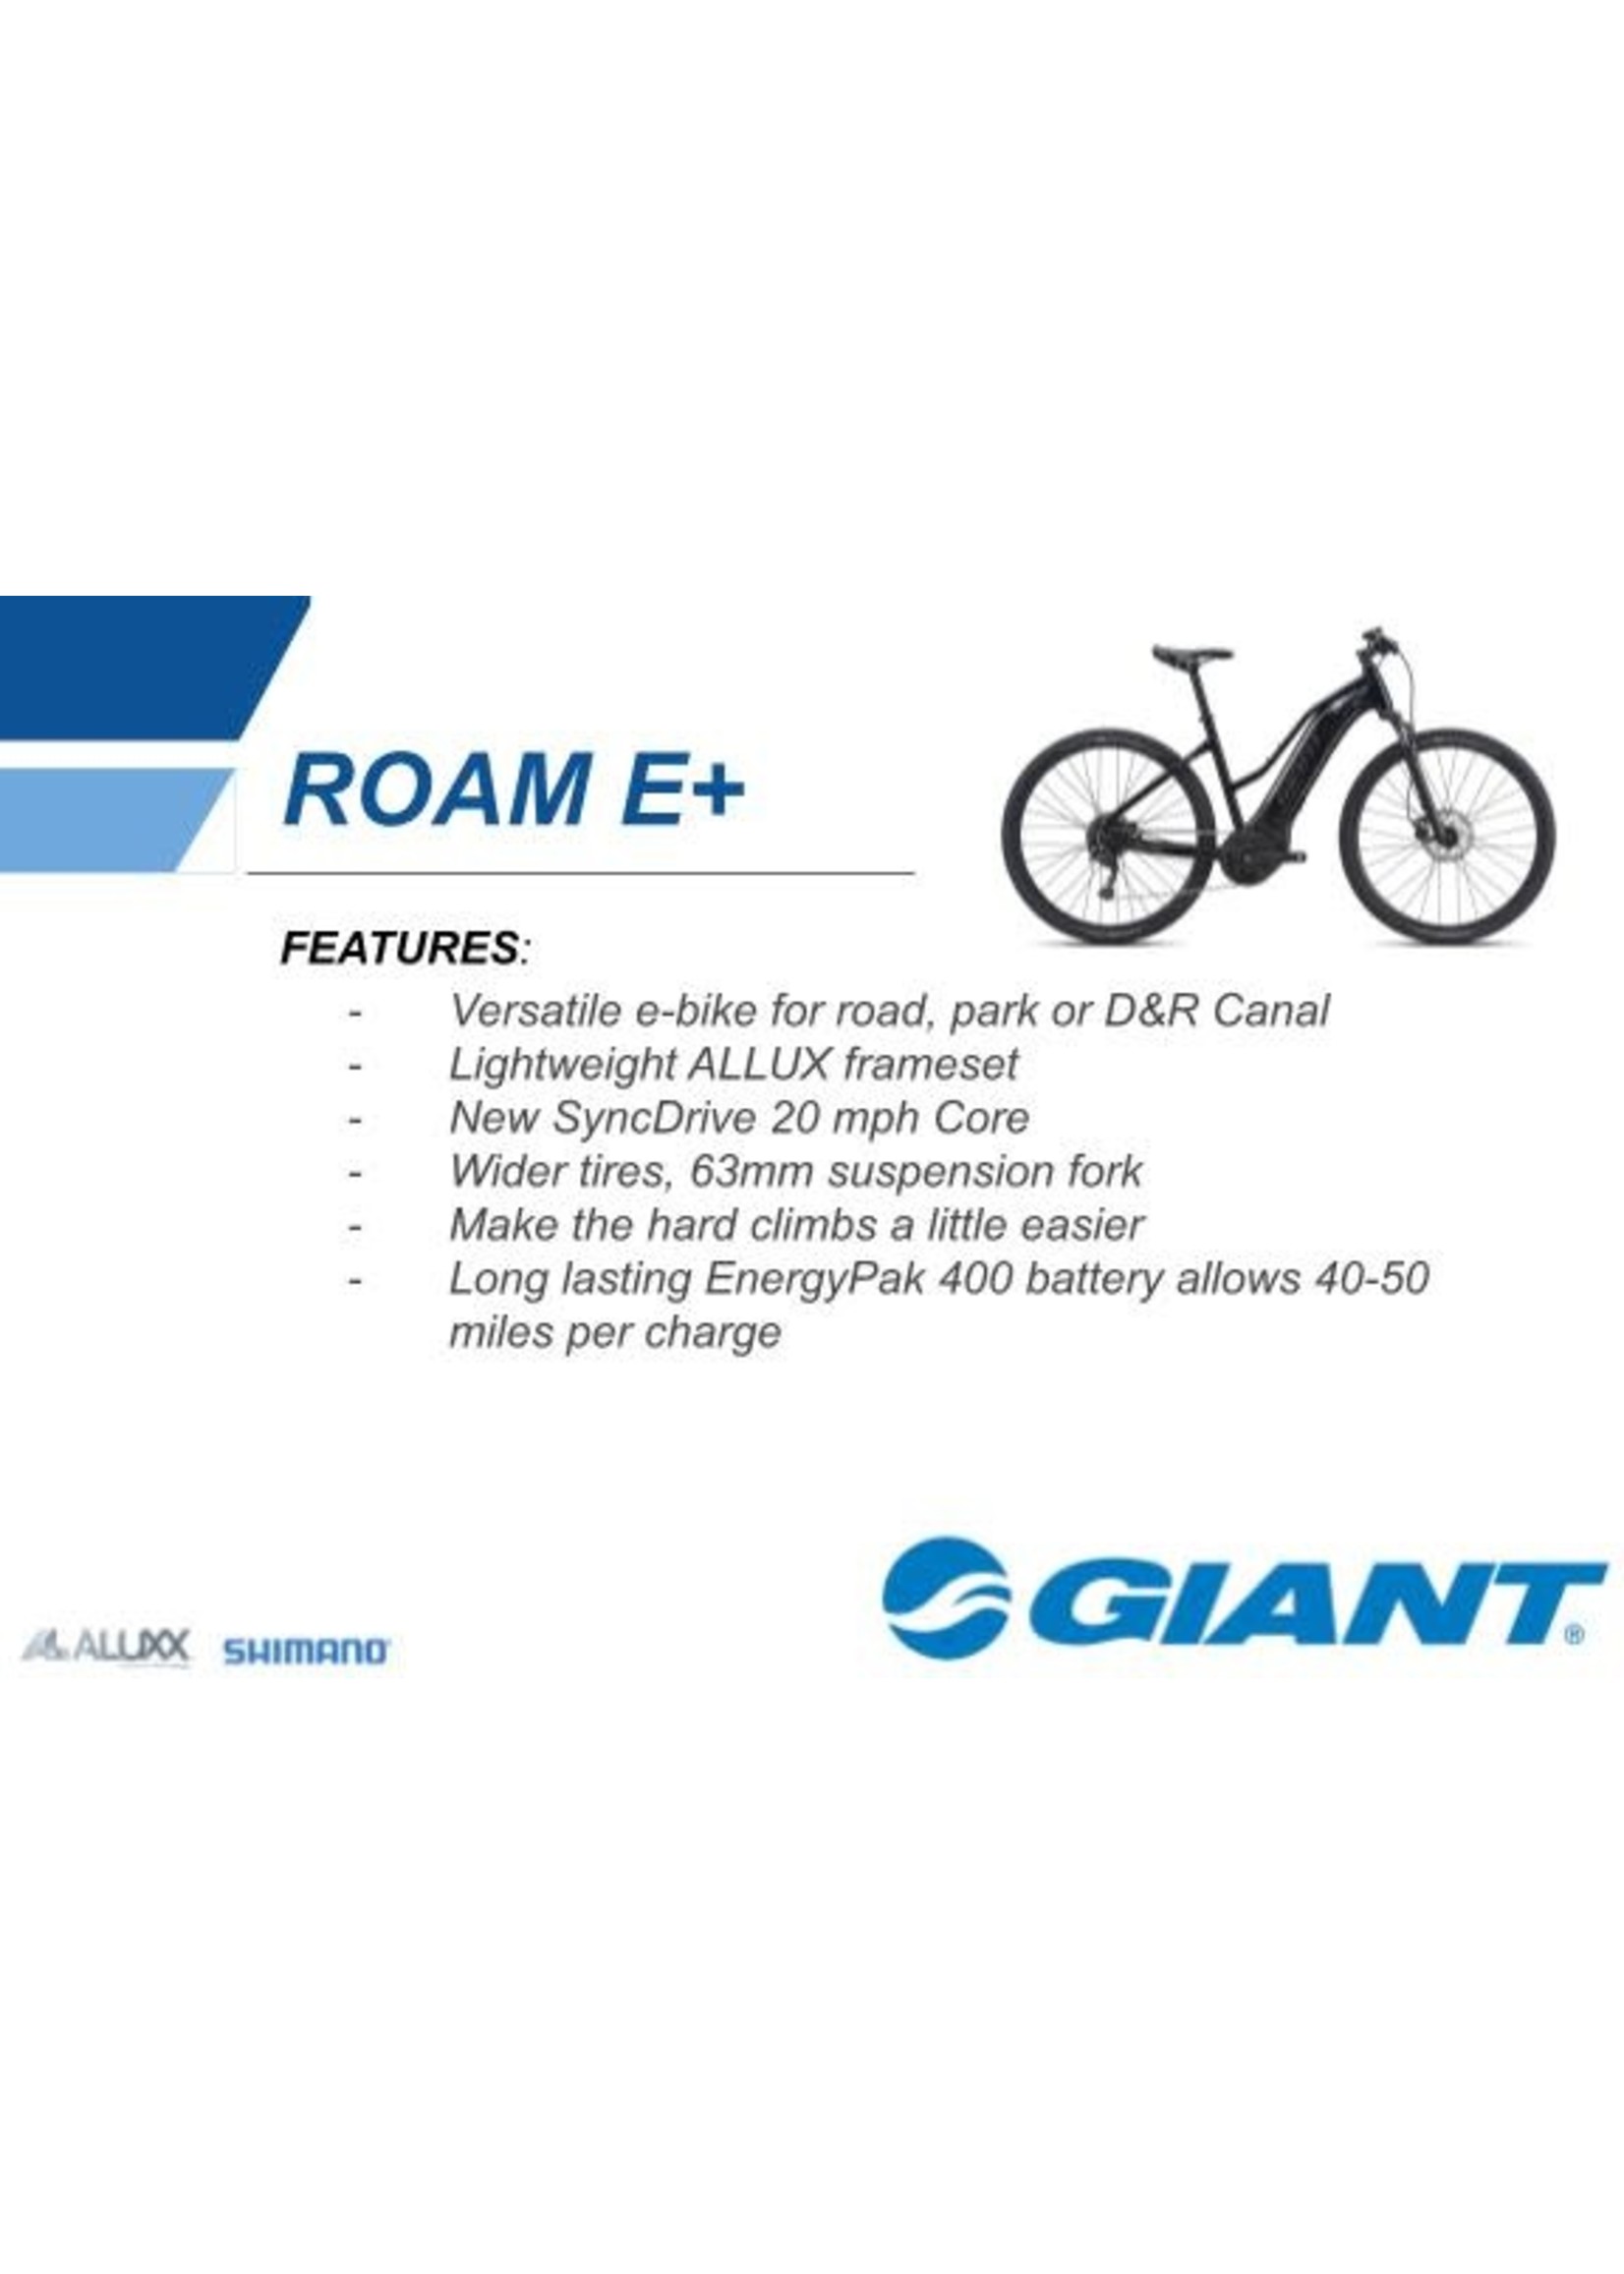 Giant Giant Roam E+ 20MPH GTS